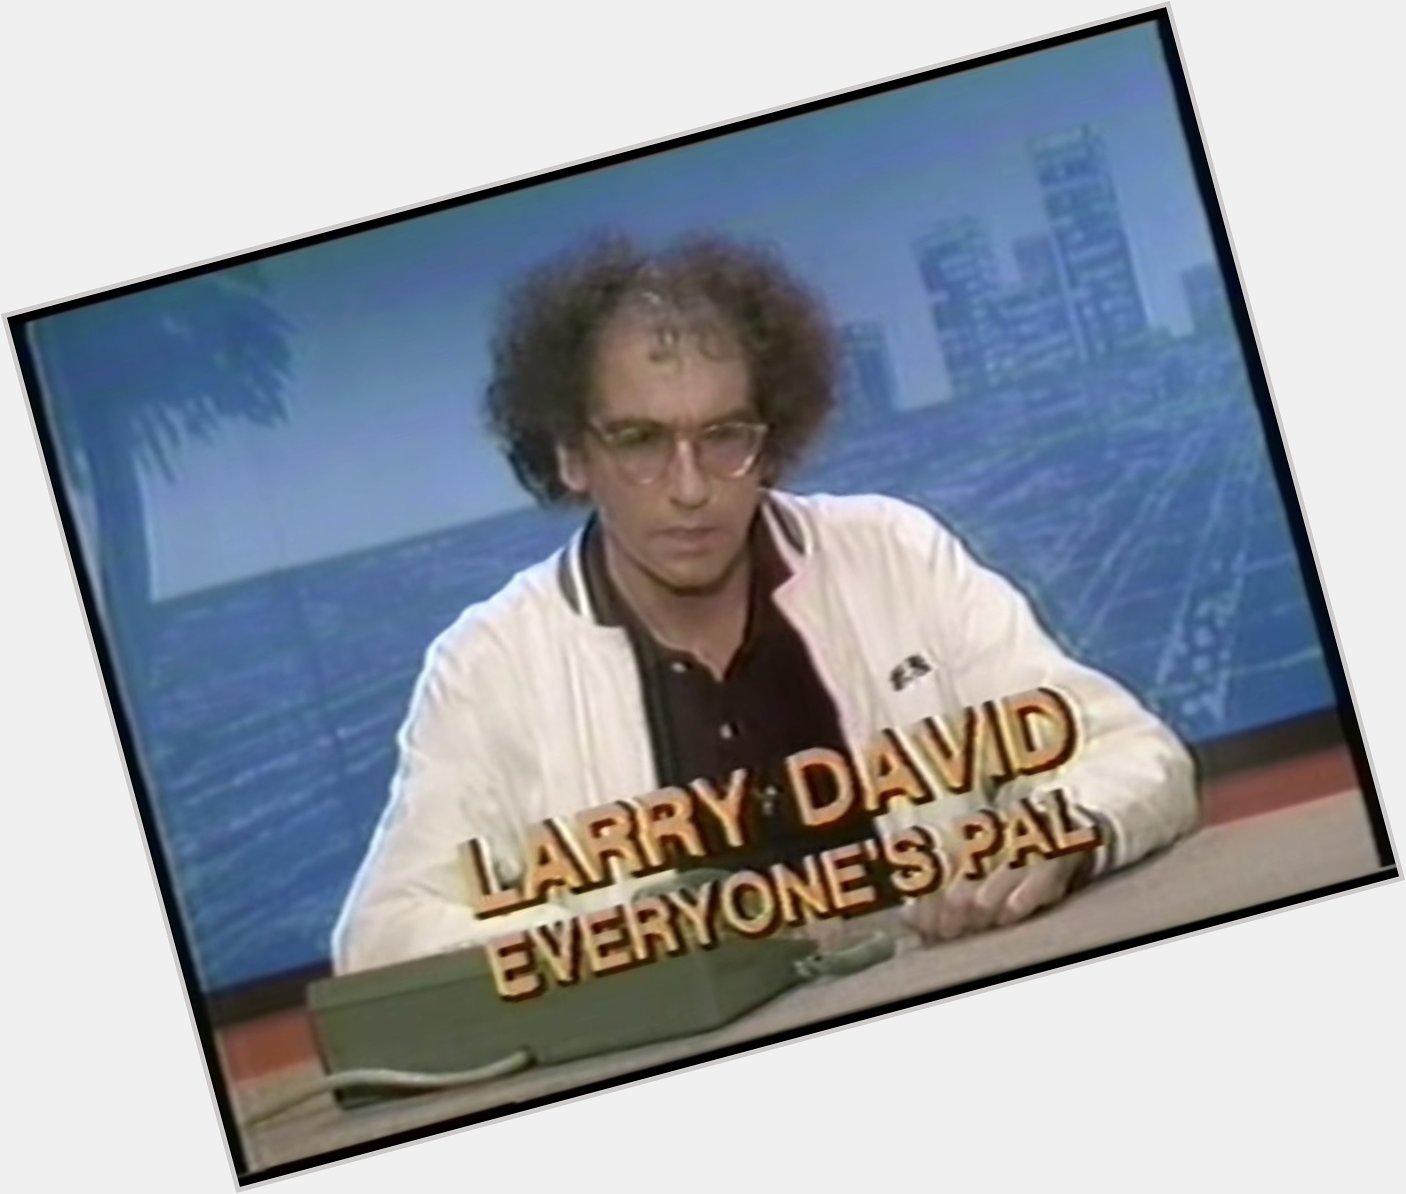 Happy 75th Birthday to everyone\s pal, Larry David! 